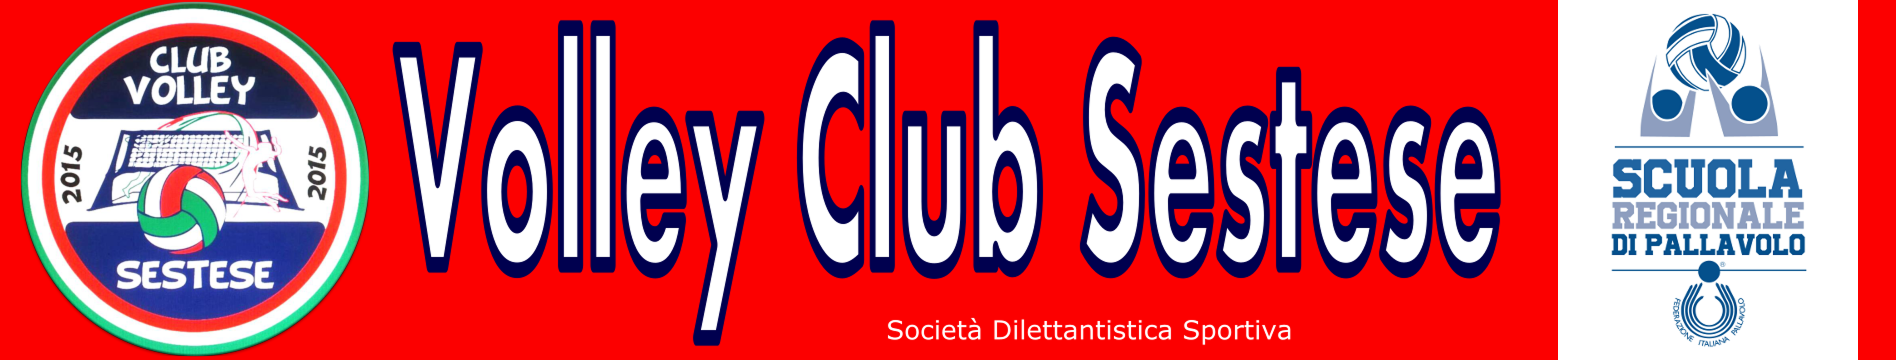 Volley Club Sestese